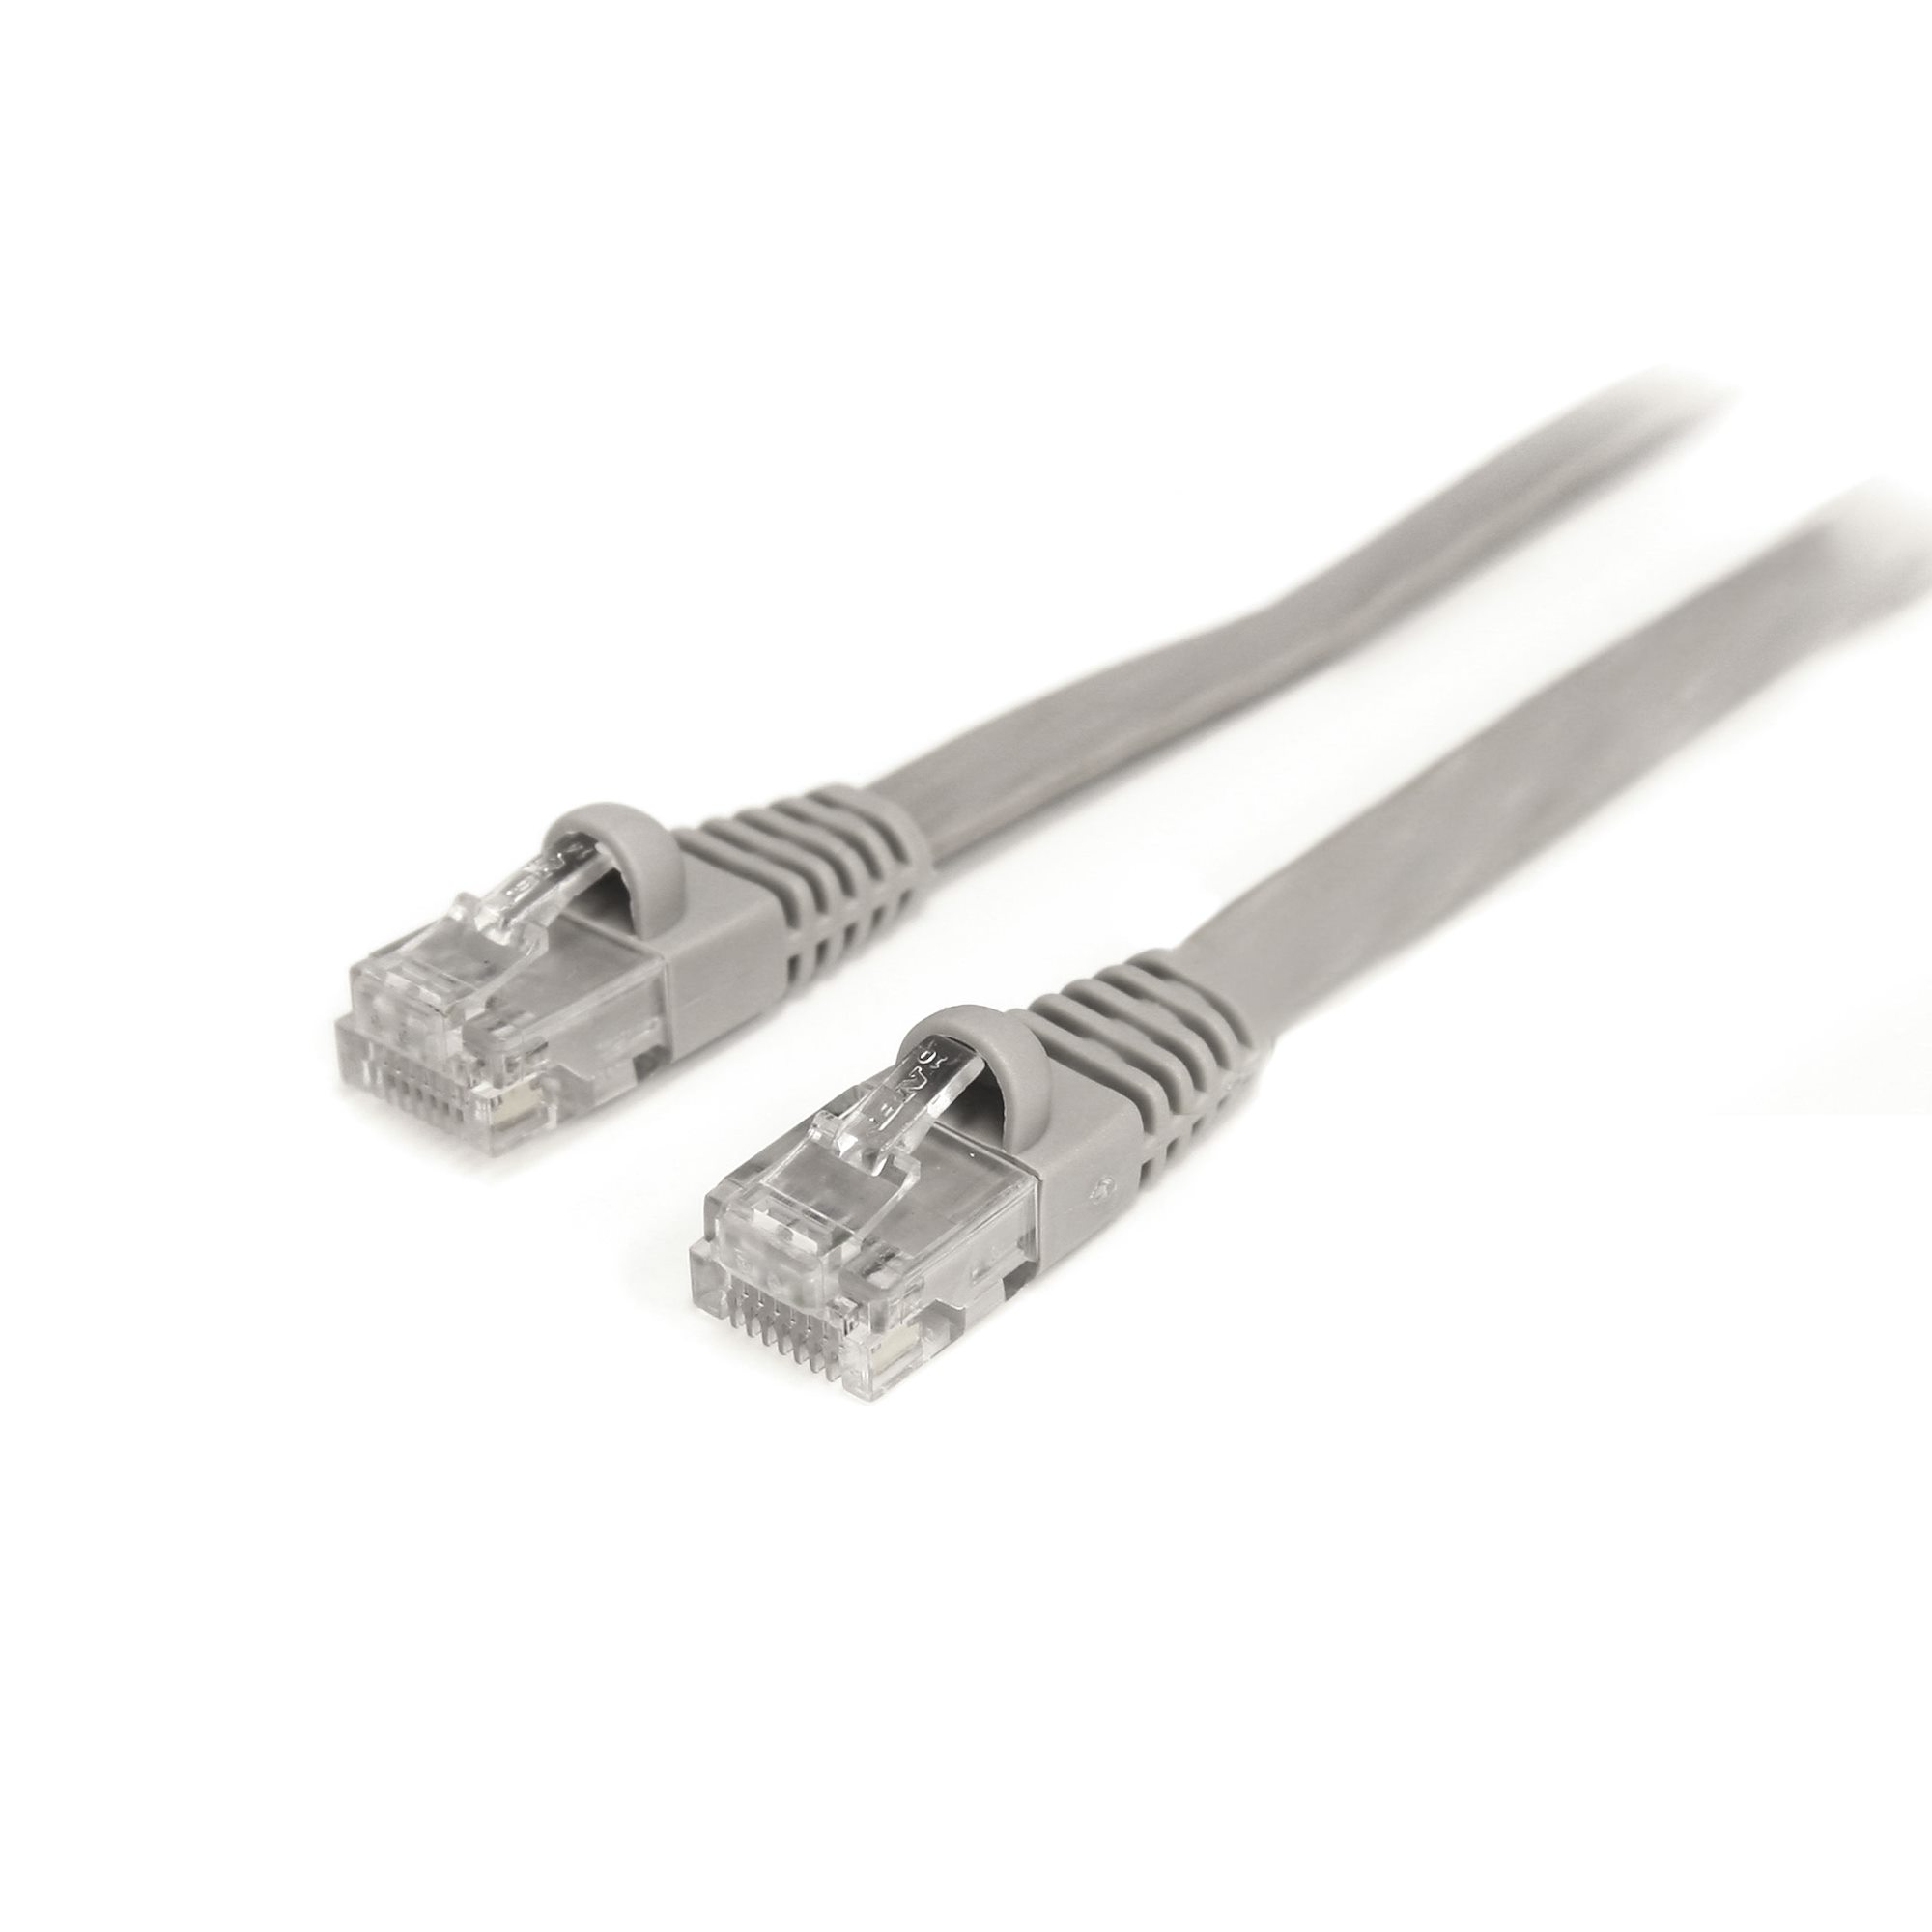 George Hanbury overeenkomst Koe 6 ft Gray Flat Cat5e UTP Patch Cable (FLAT45GR6) - Cat 5e Cables |  StarTech.com